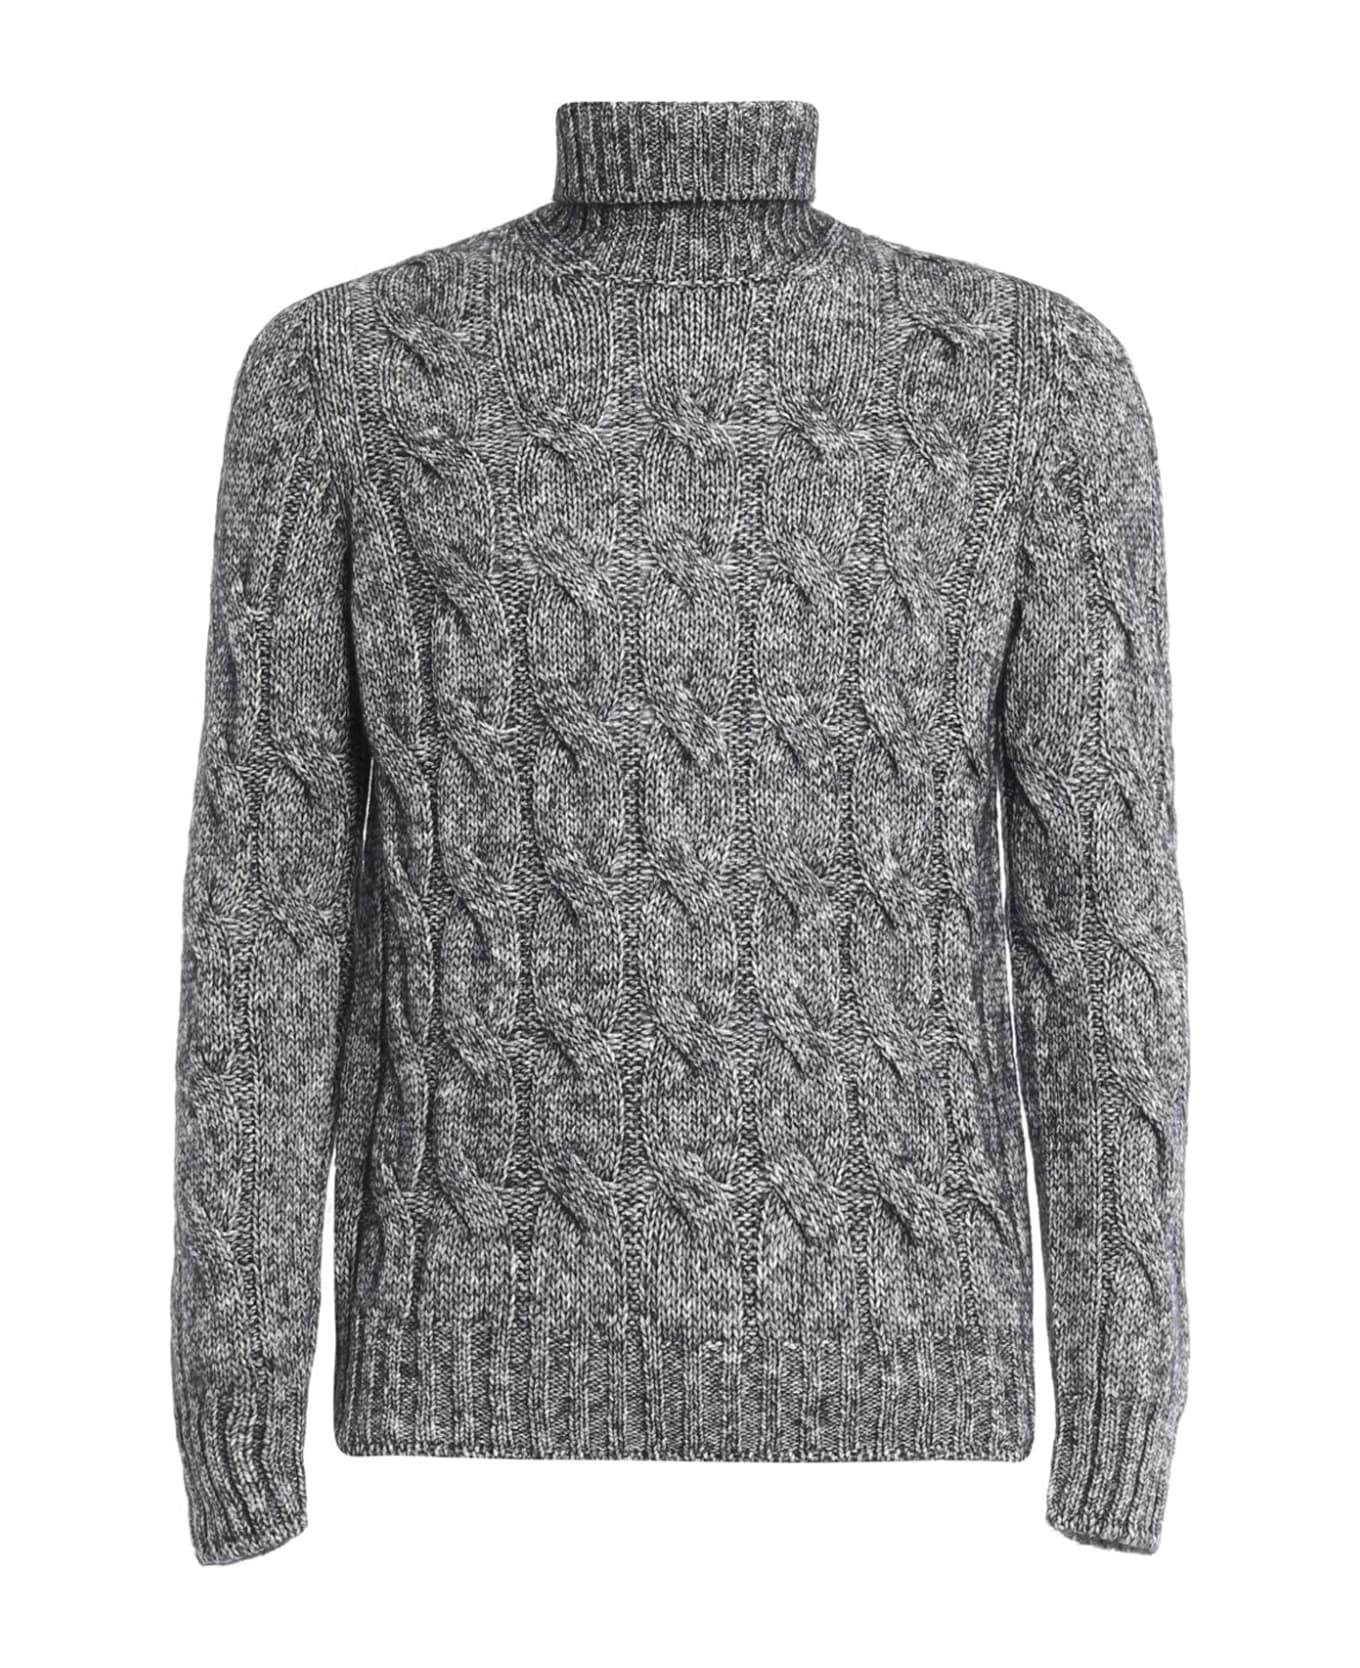 Saint Laurent Turtleneck Sweater - Silver ニットウェア